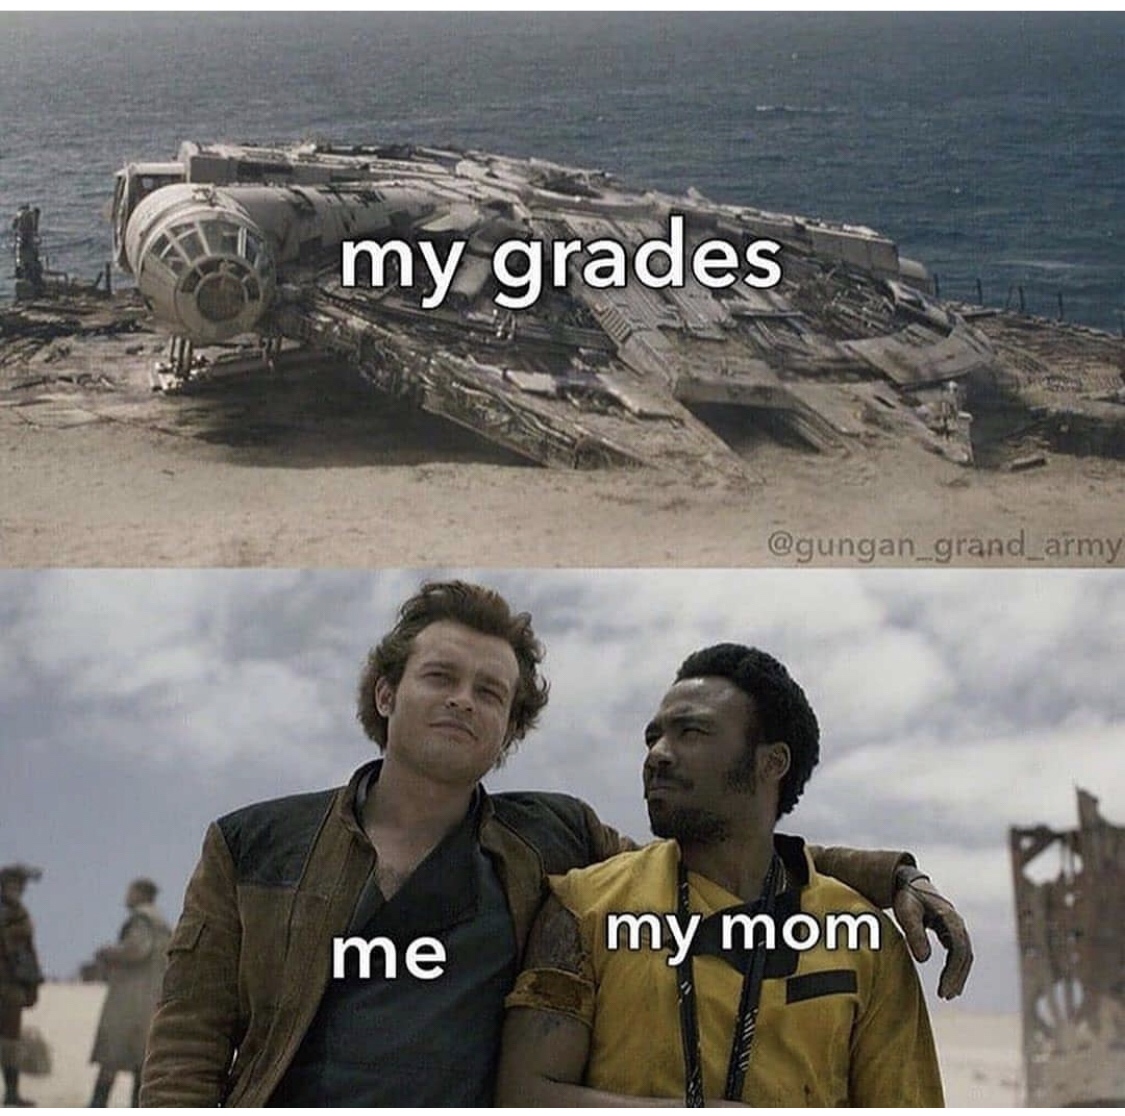 star wars jo jo memes - my grades my mom me